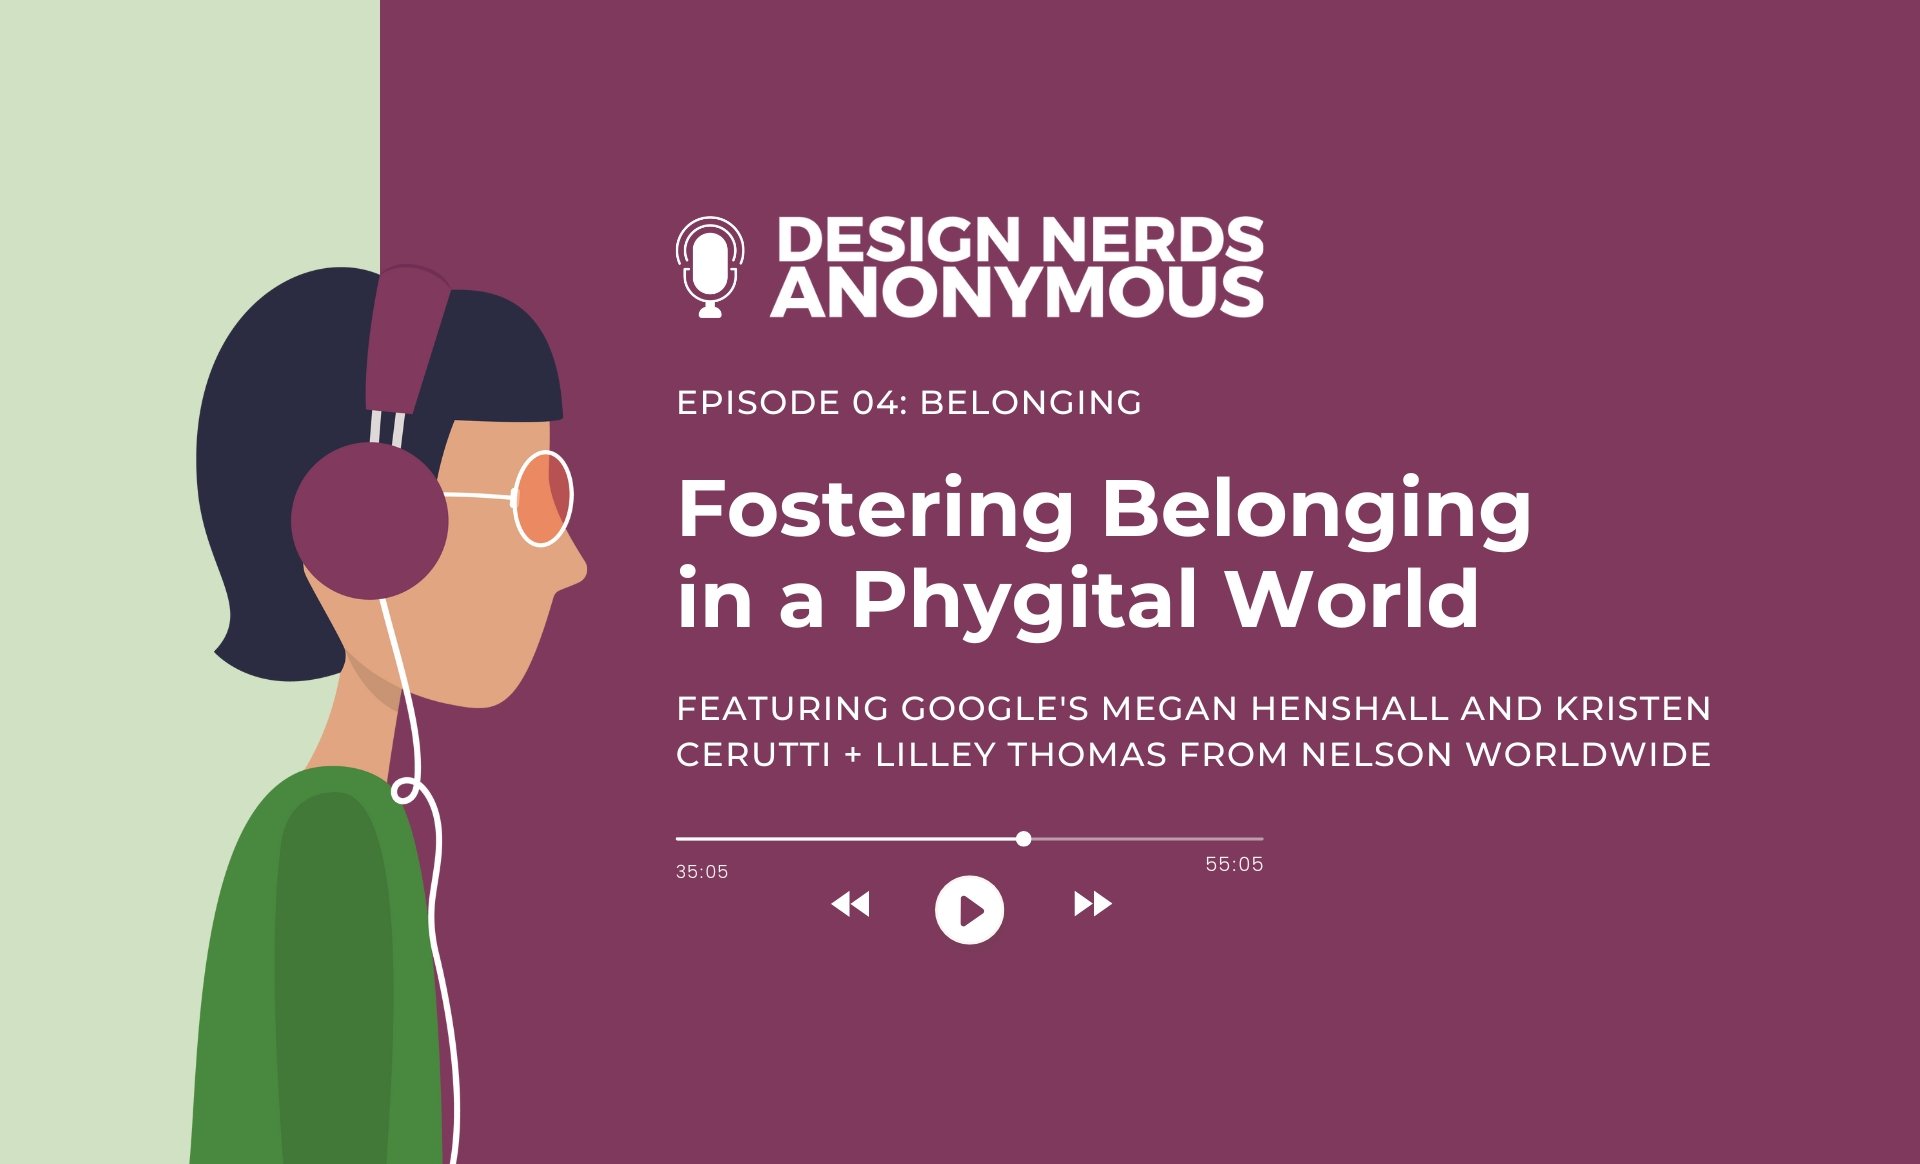 Design Nerds Anonymous: Season 5 Episode 4, Fostering Belonging in a Phygital World